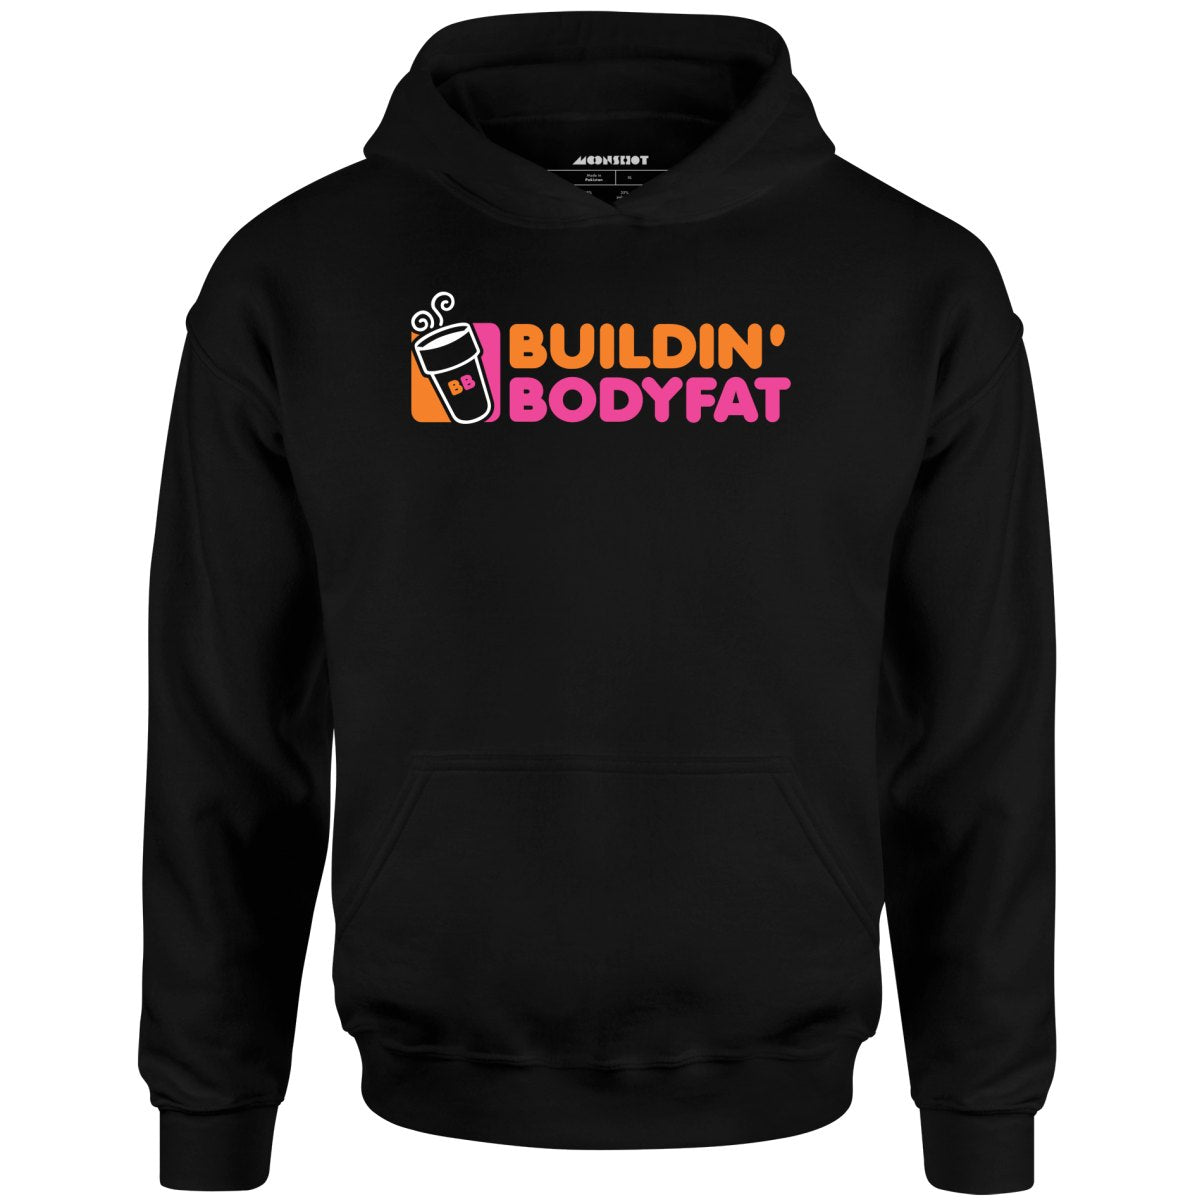 Buildin' Bodyfat - Unisex Hoodie